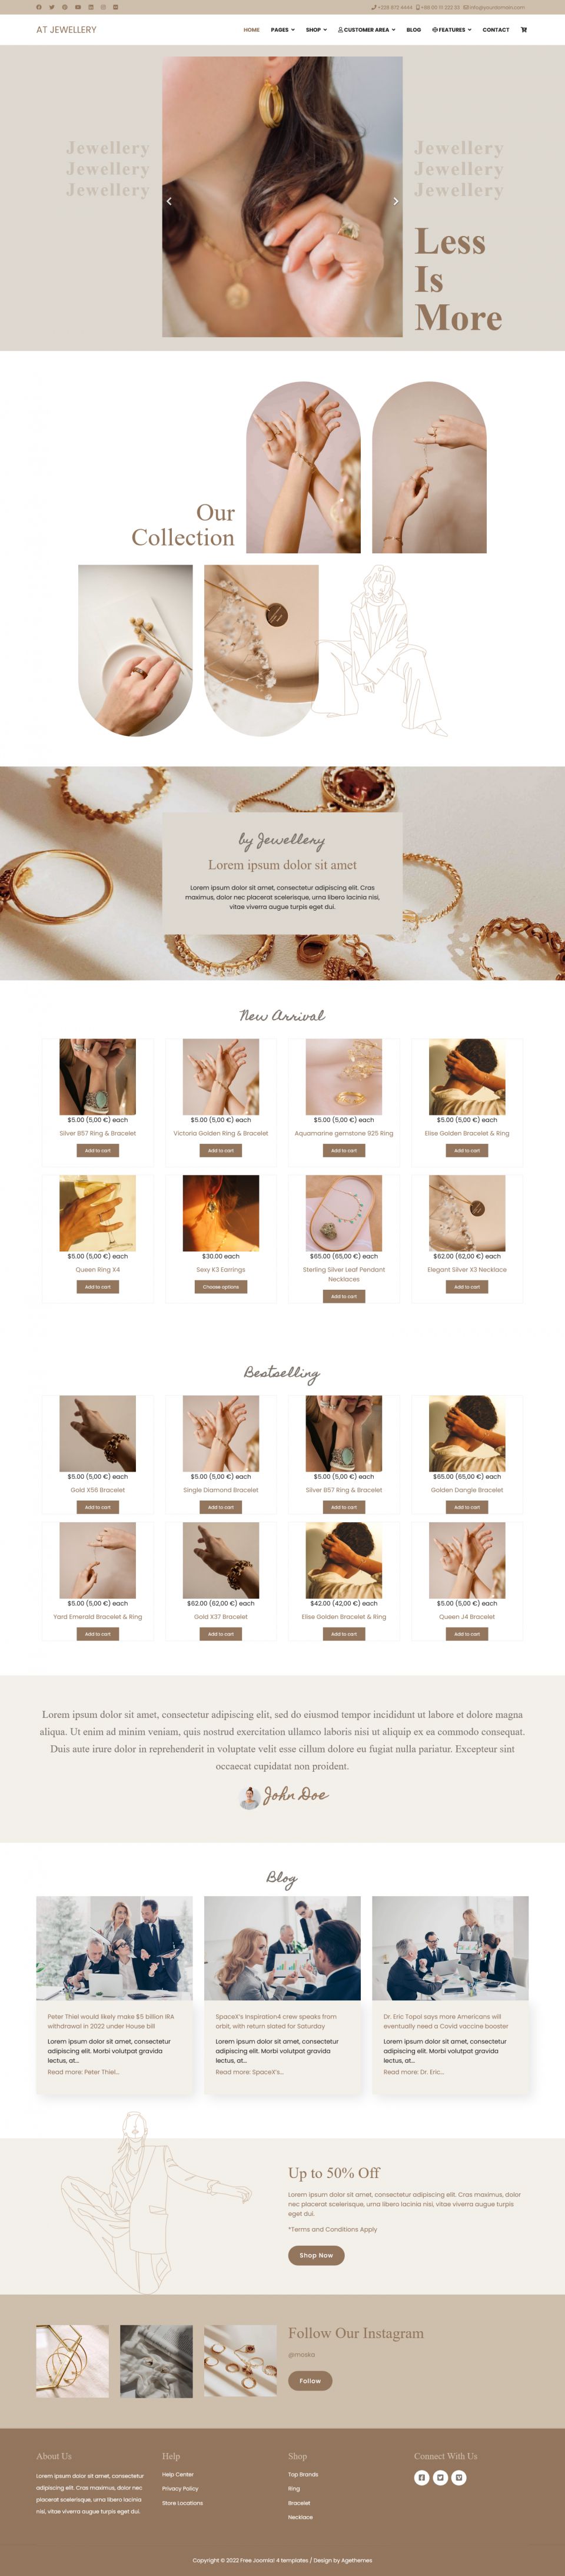 Joomla template AGE Themes Jewellery Store